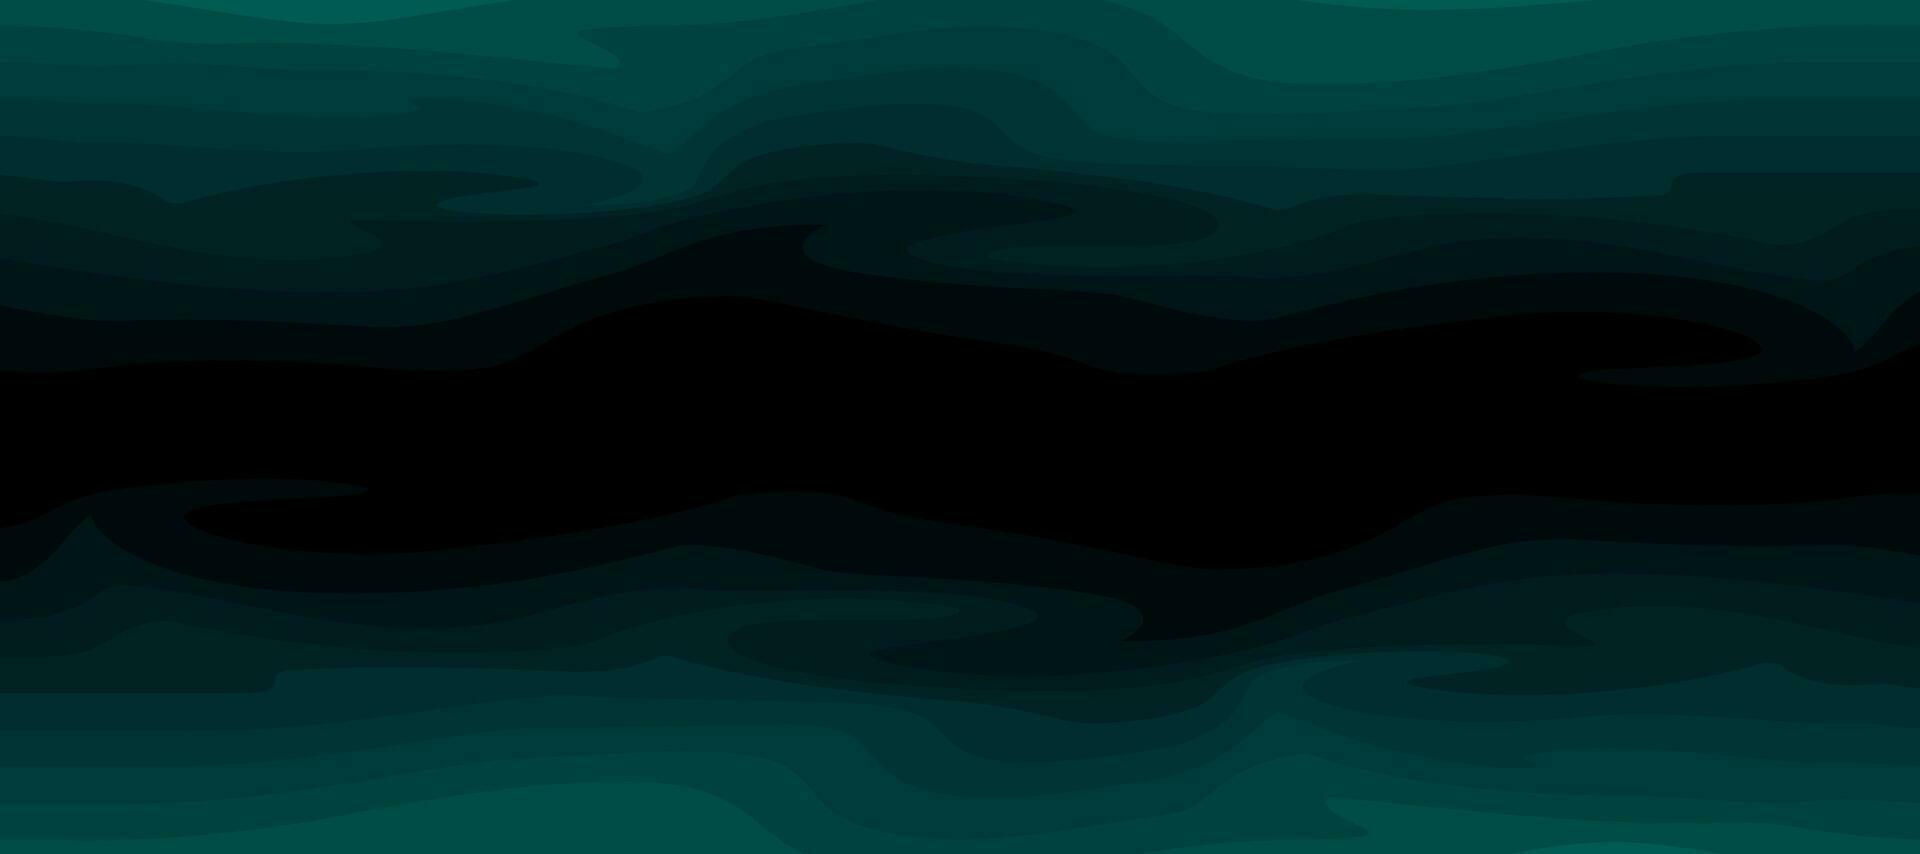 abstract donker groen taling diep diepte laag water Golf achtergrond vector